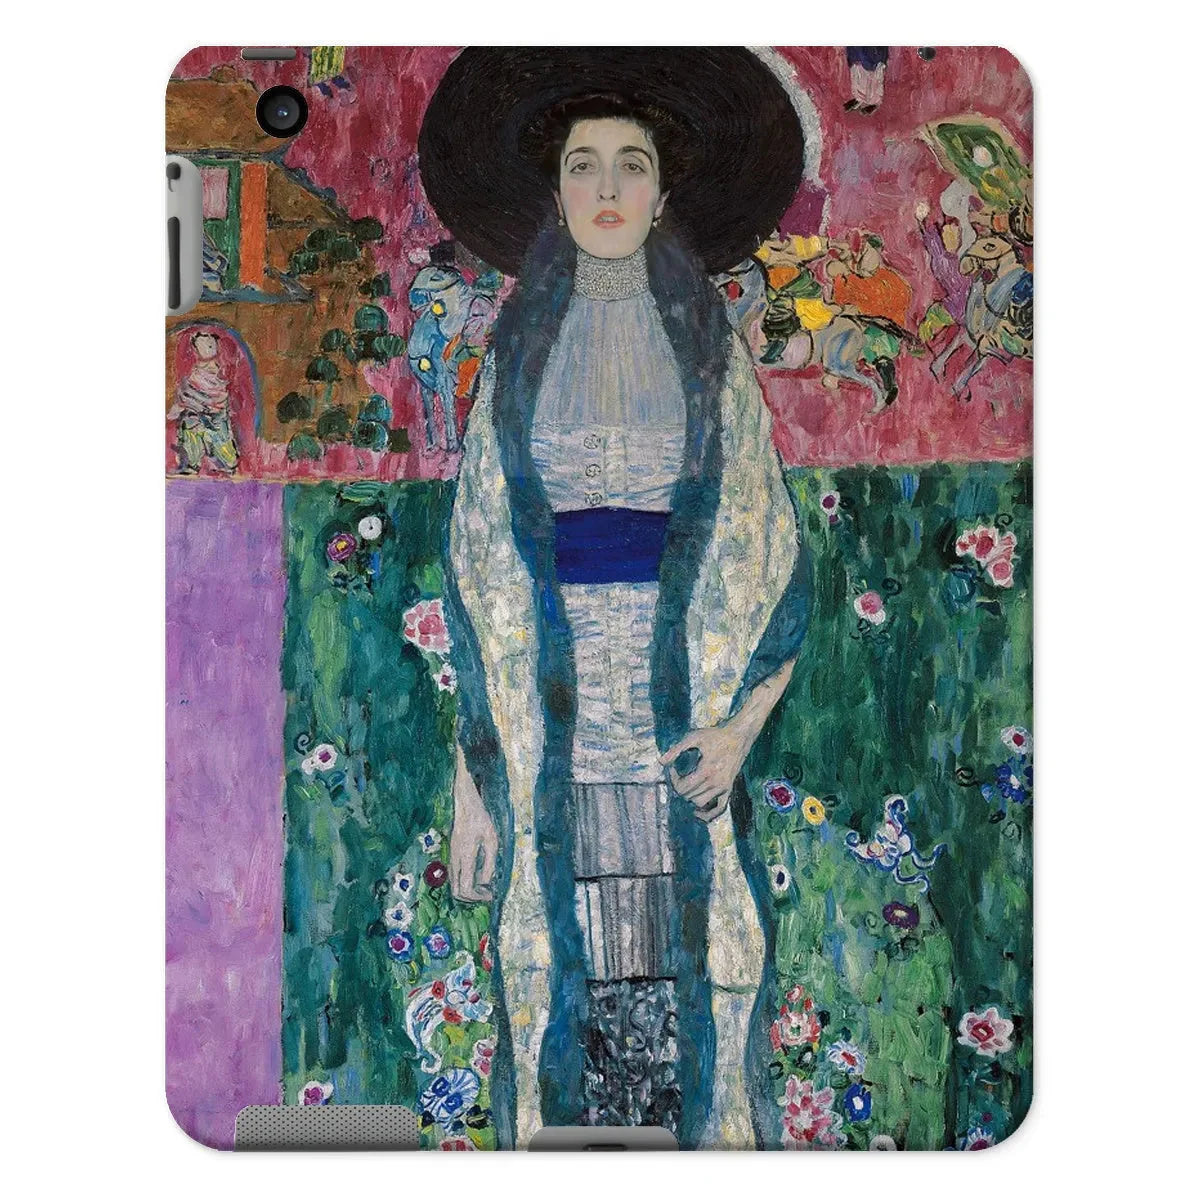 Adele Bloch - bauer By Gustav Klimt Aesthetic Ipad Case - Slim Designer Back Cover - Ipad 2/3/4 - Gloss - Tablet